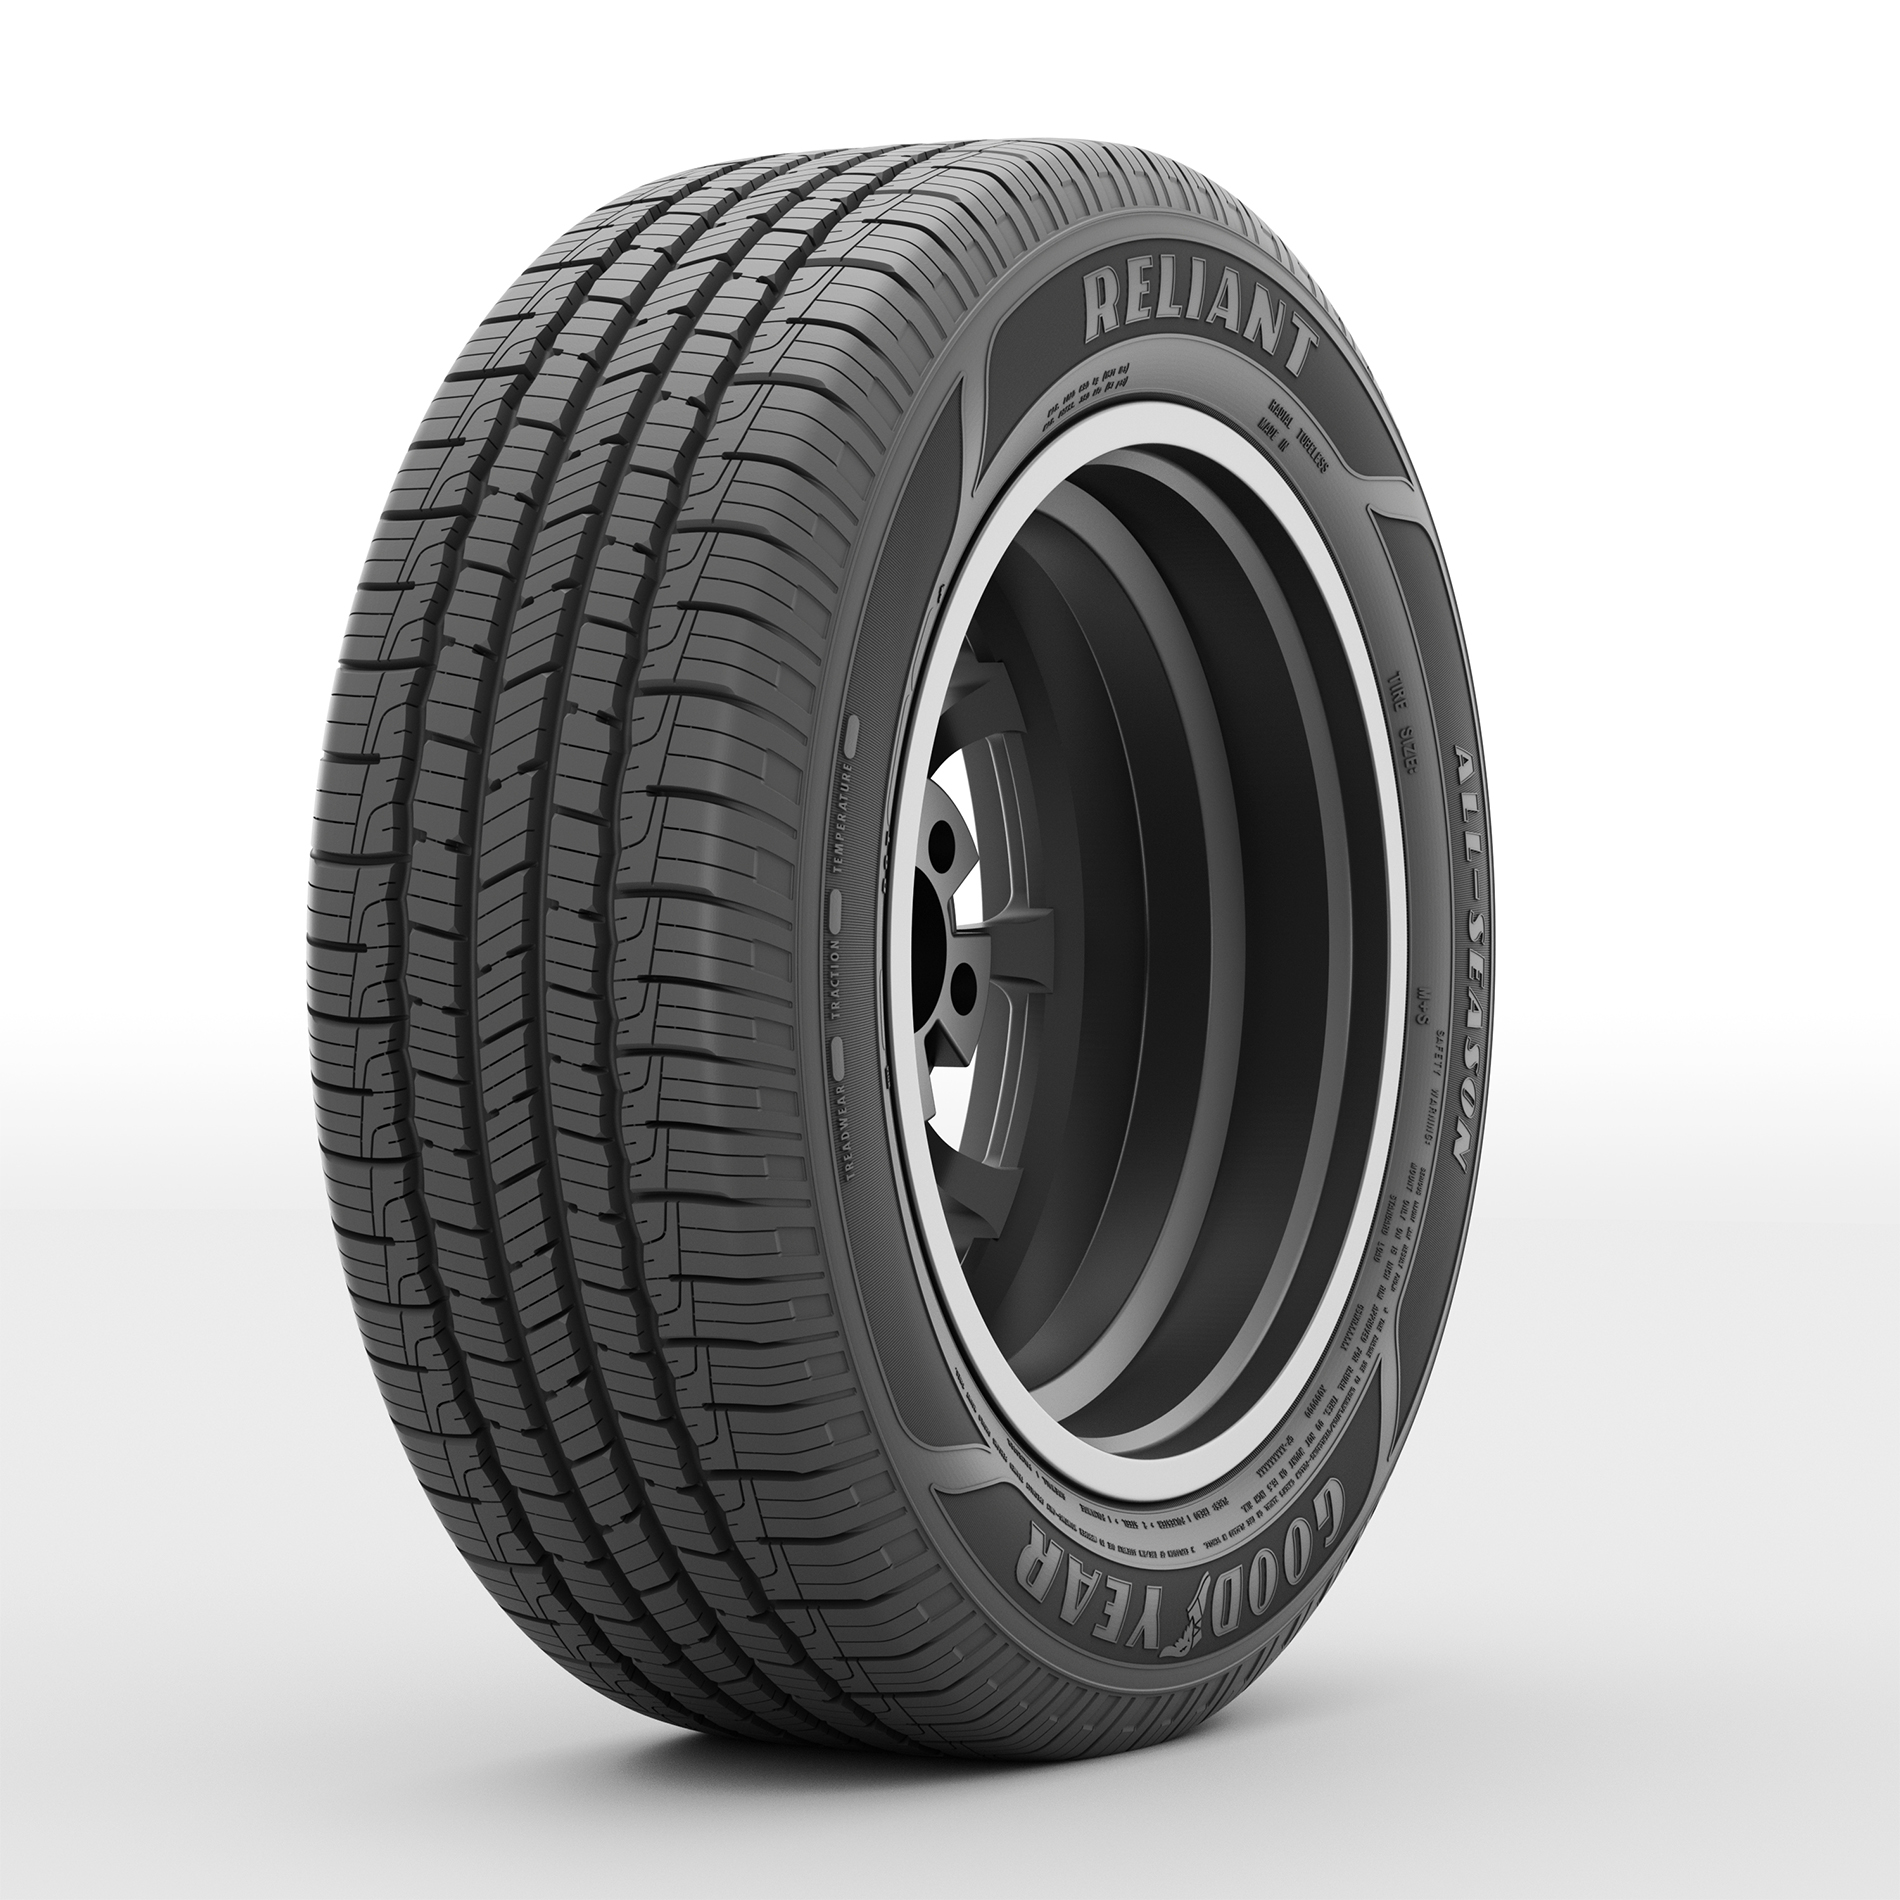 Goodyear Reliant All-Season 235/60R17 Tire 102H All-Season